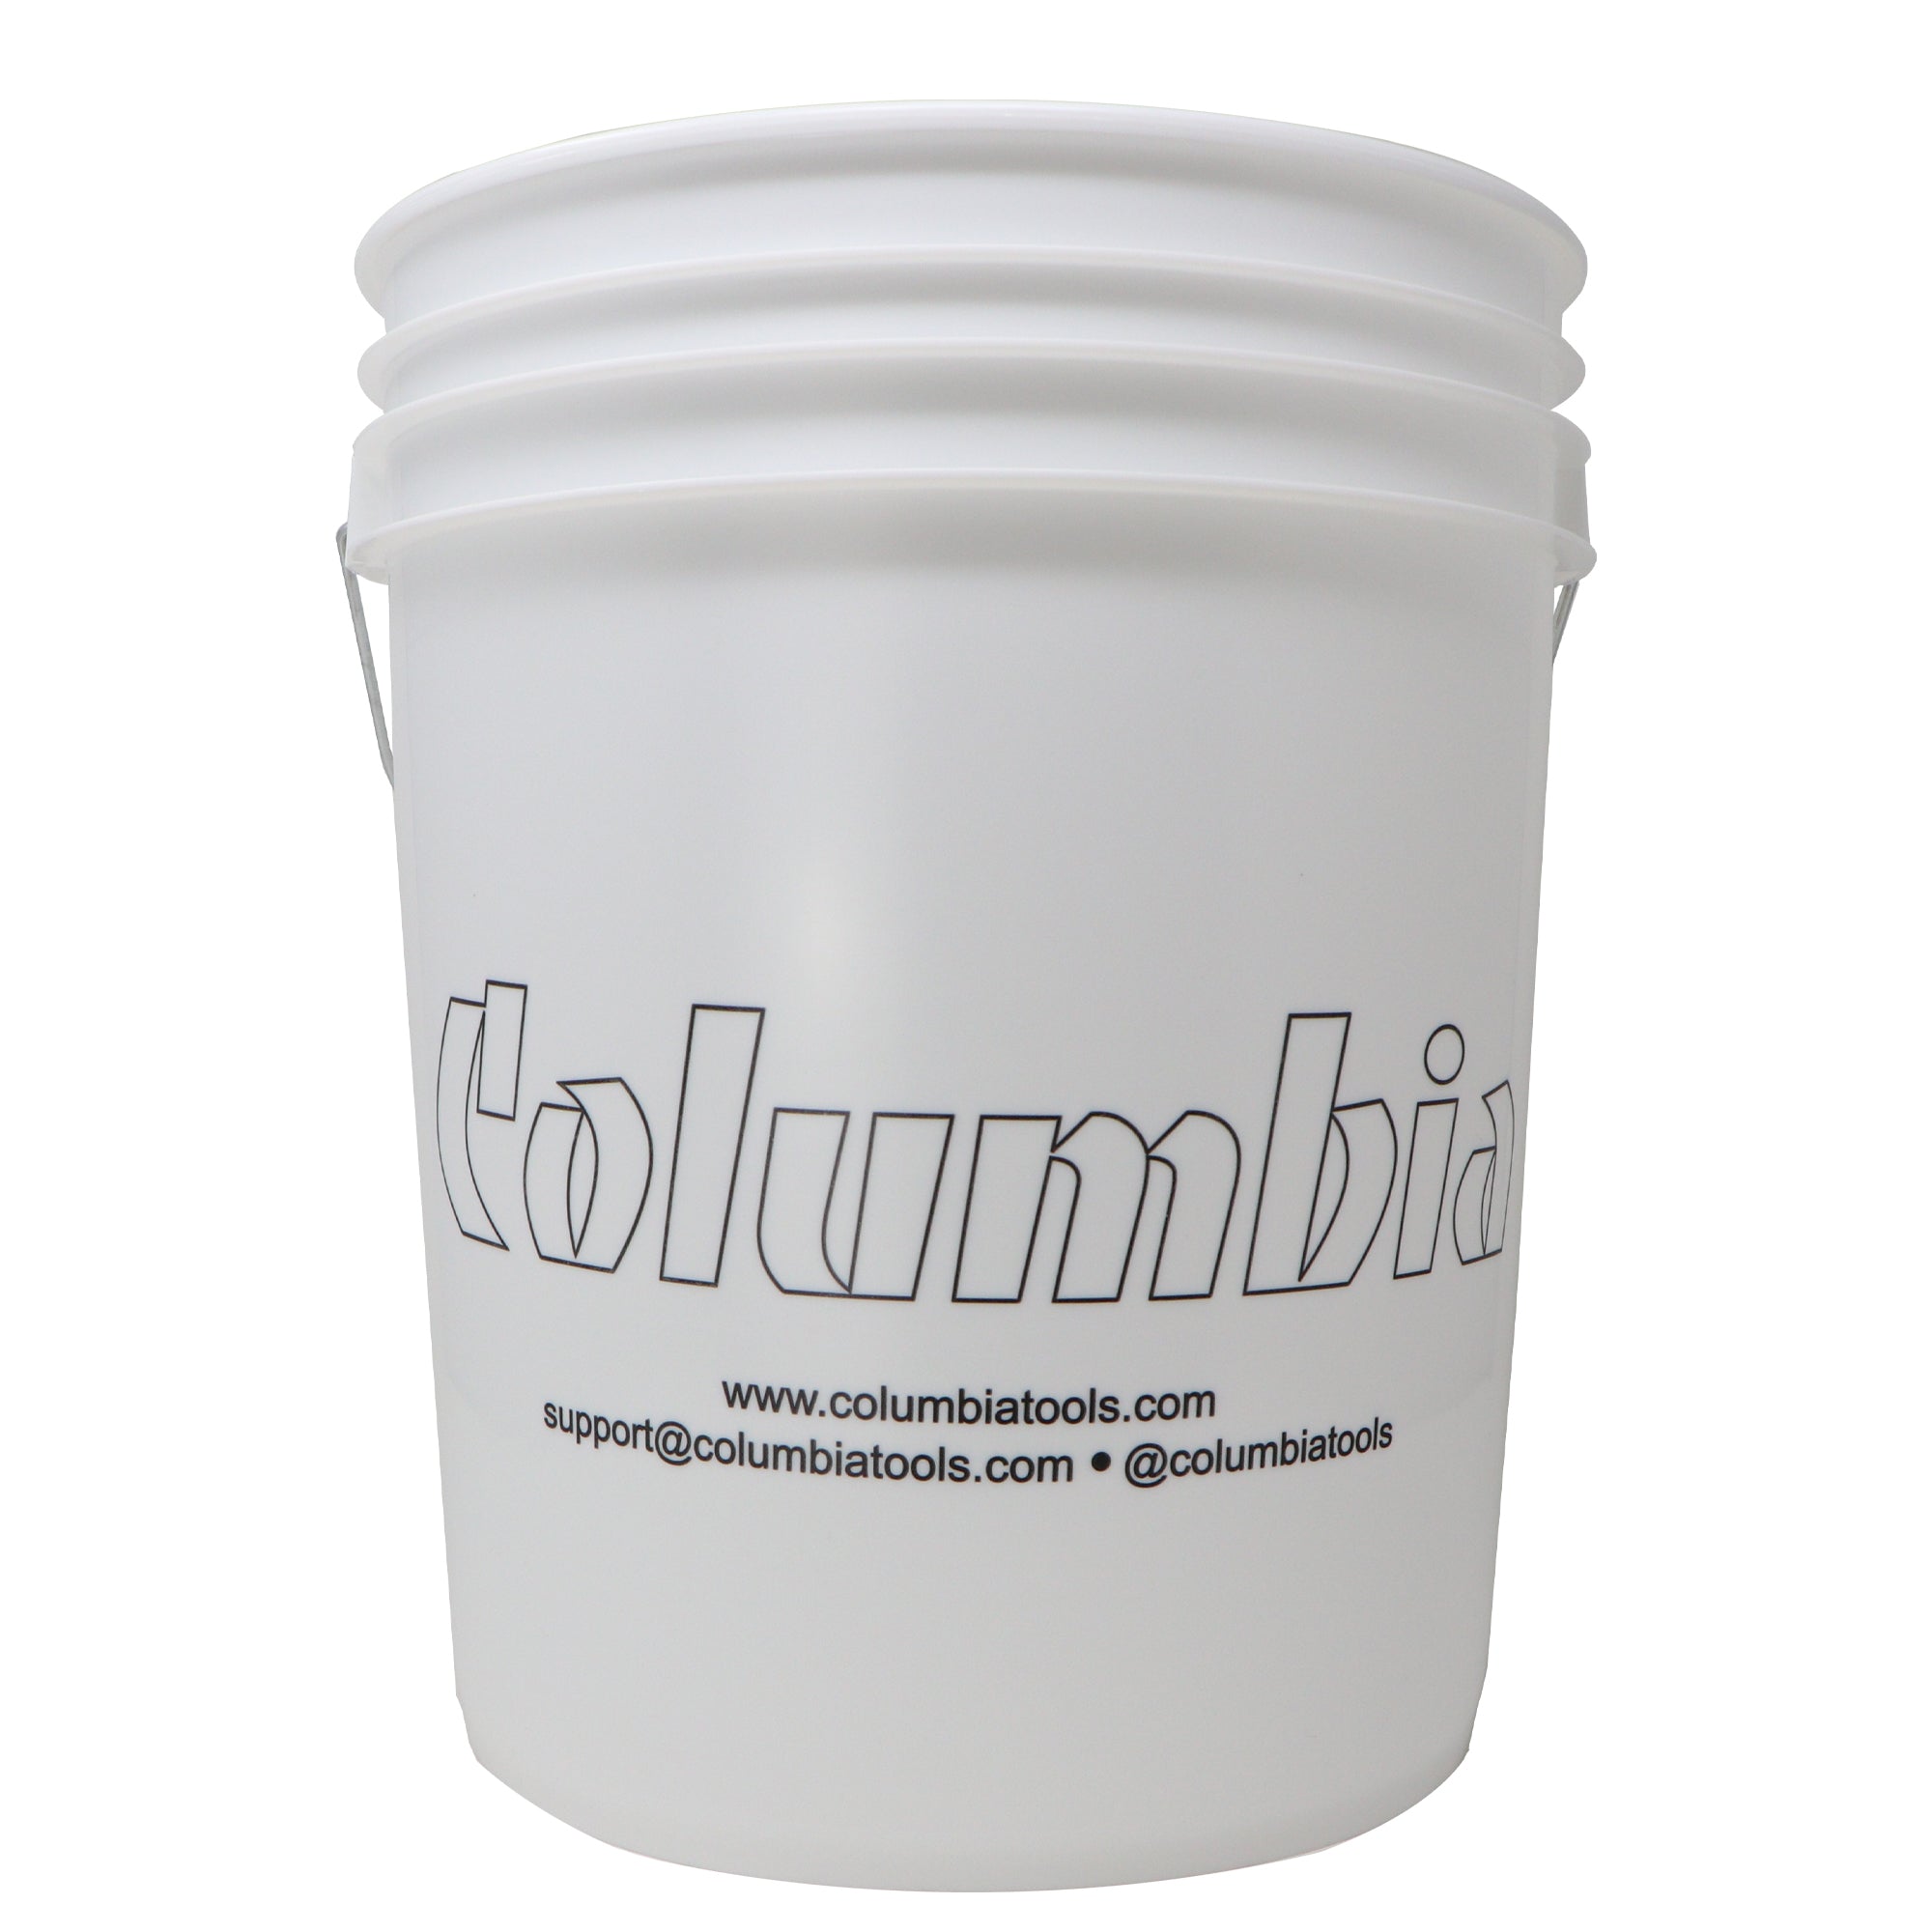 CSR and Columbia 15 Year Anniversary 5 Gallon Bucket